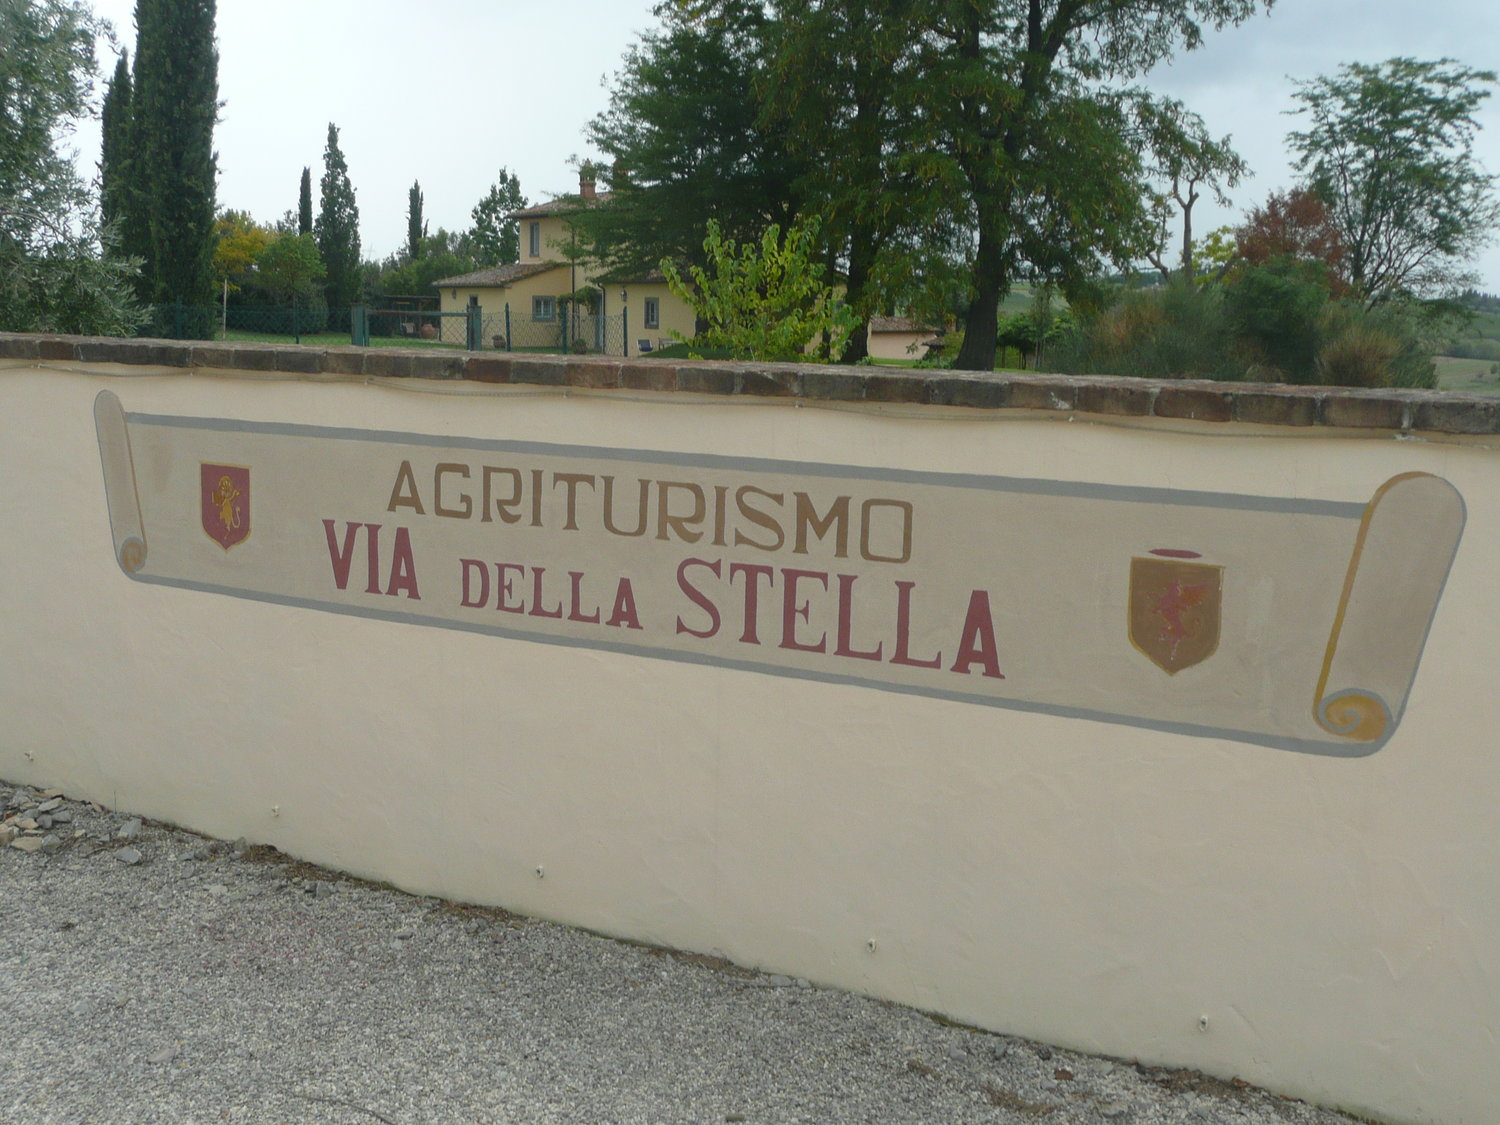 417_Agriturismo Via della Stella, Toscane, vakantiehuis met zwembad, kindvriendelijk, Trasimeno meer 91